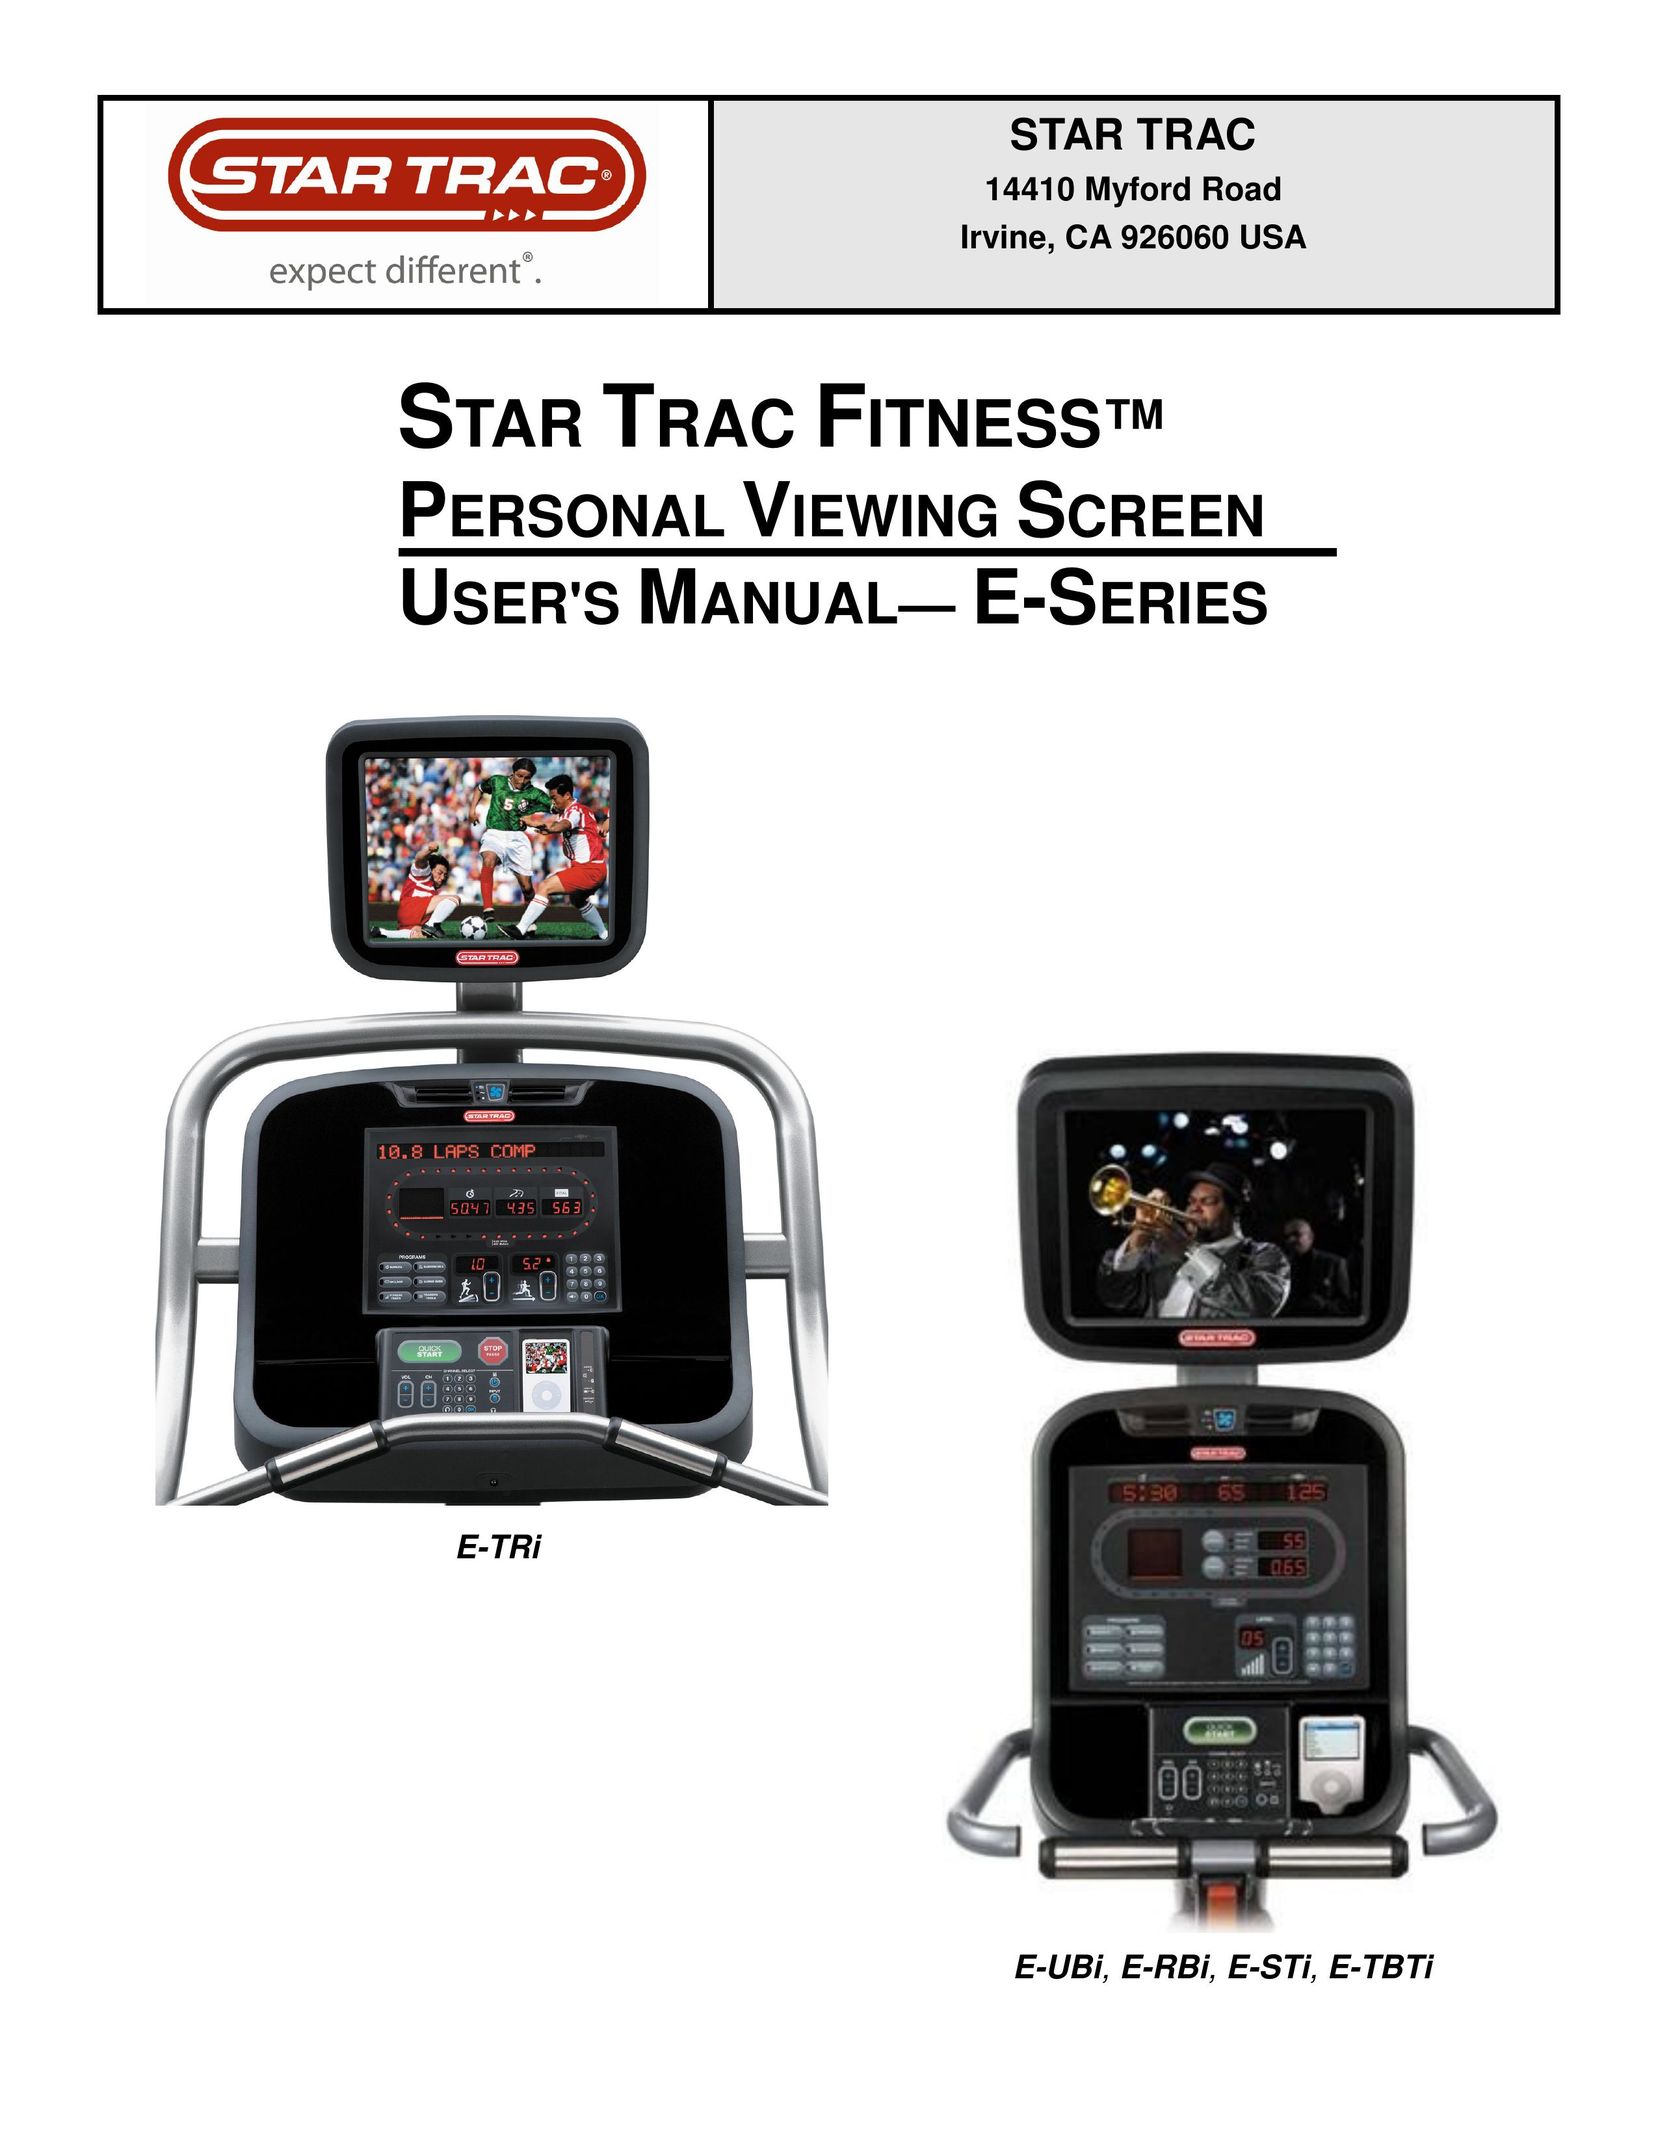 Star Trac E-STI Fitness Electronics User Manual